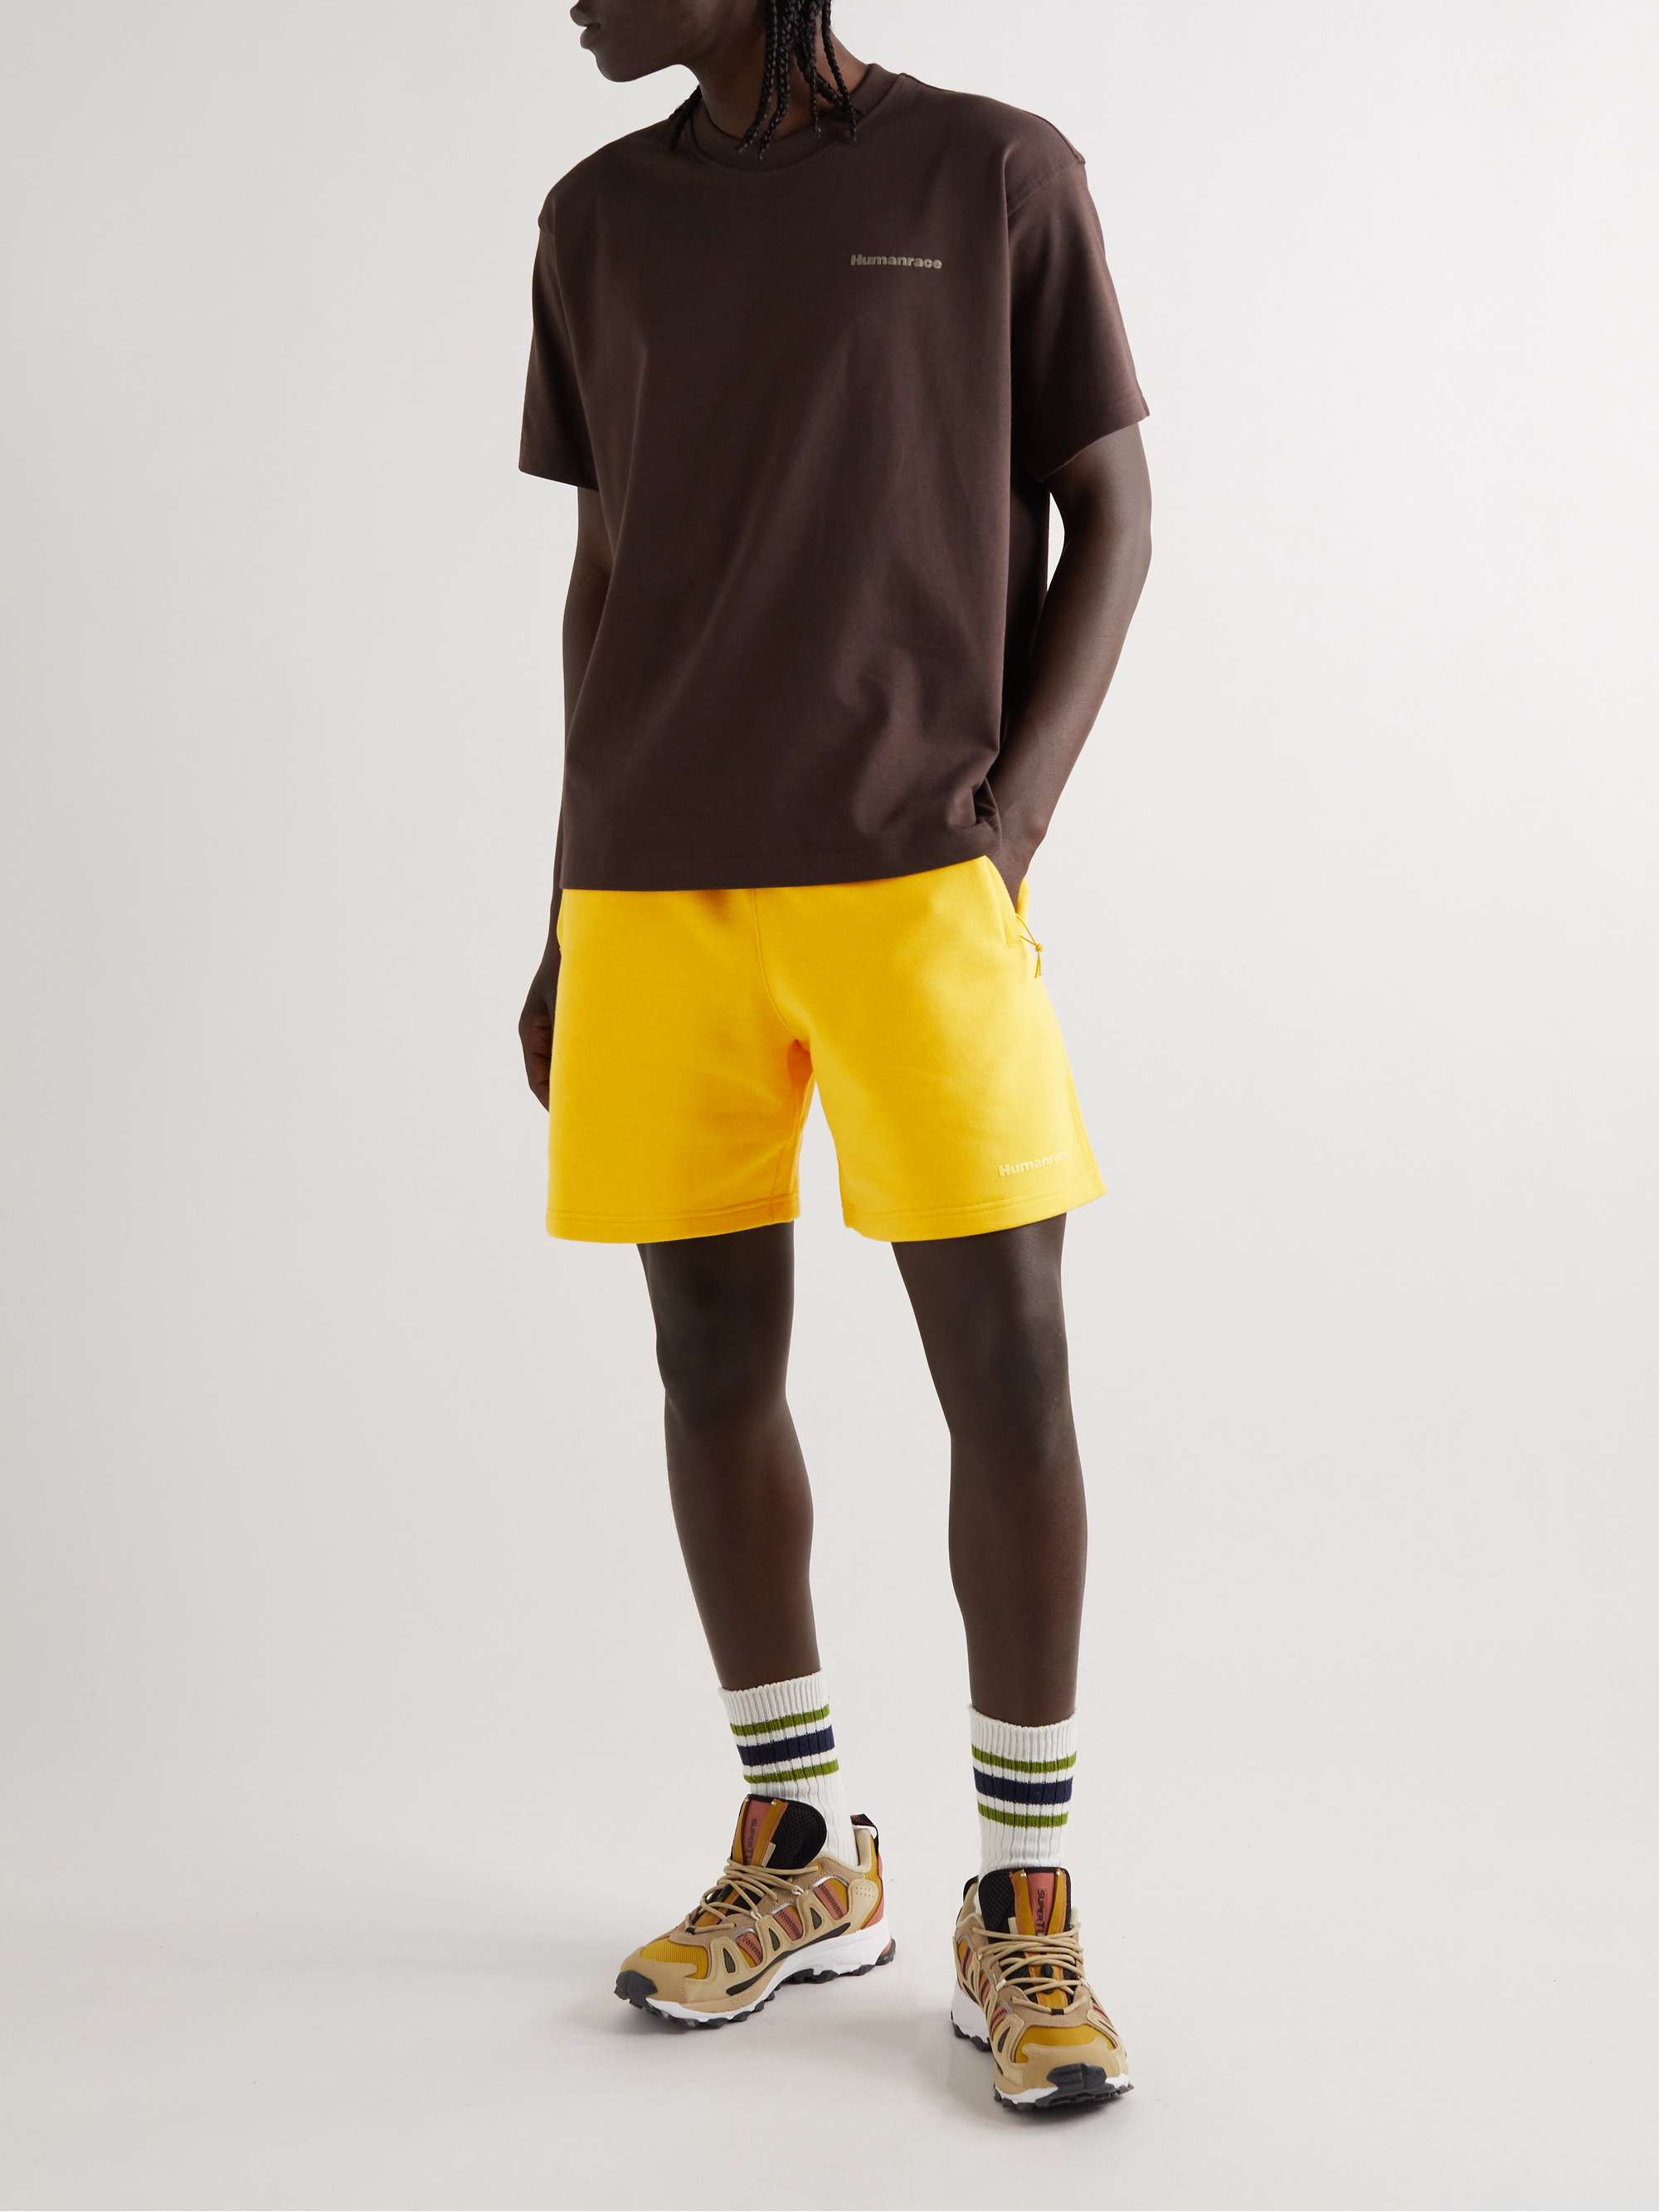 adidas Originals Cotton Adidas X Pharrell Williams Shorts in Cream Natural Mens Clothing Shorts Casual shorts for Men 